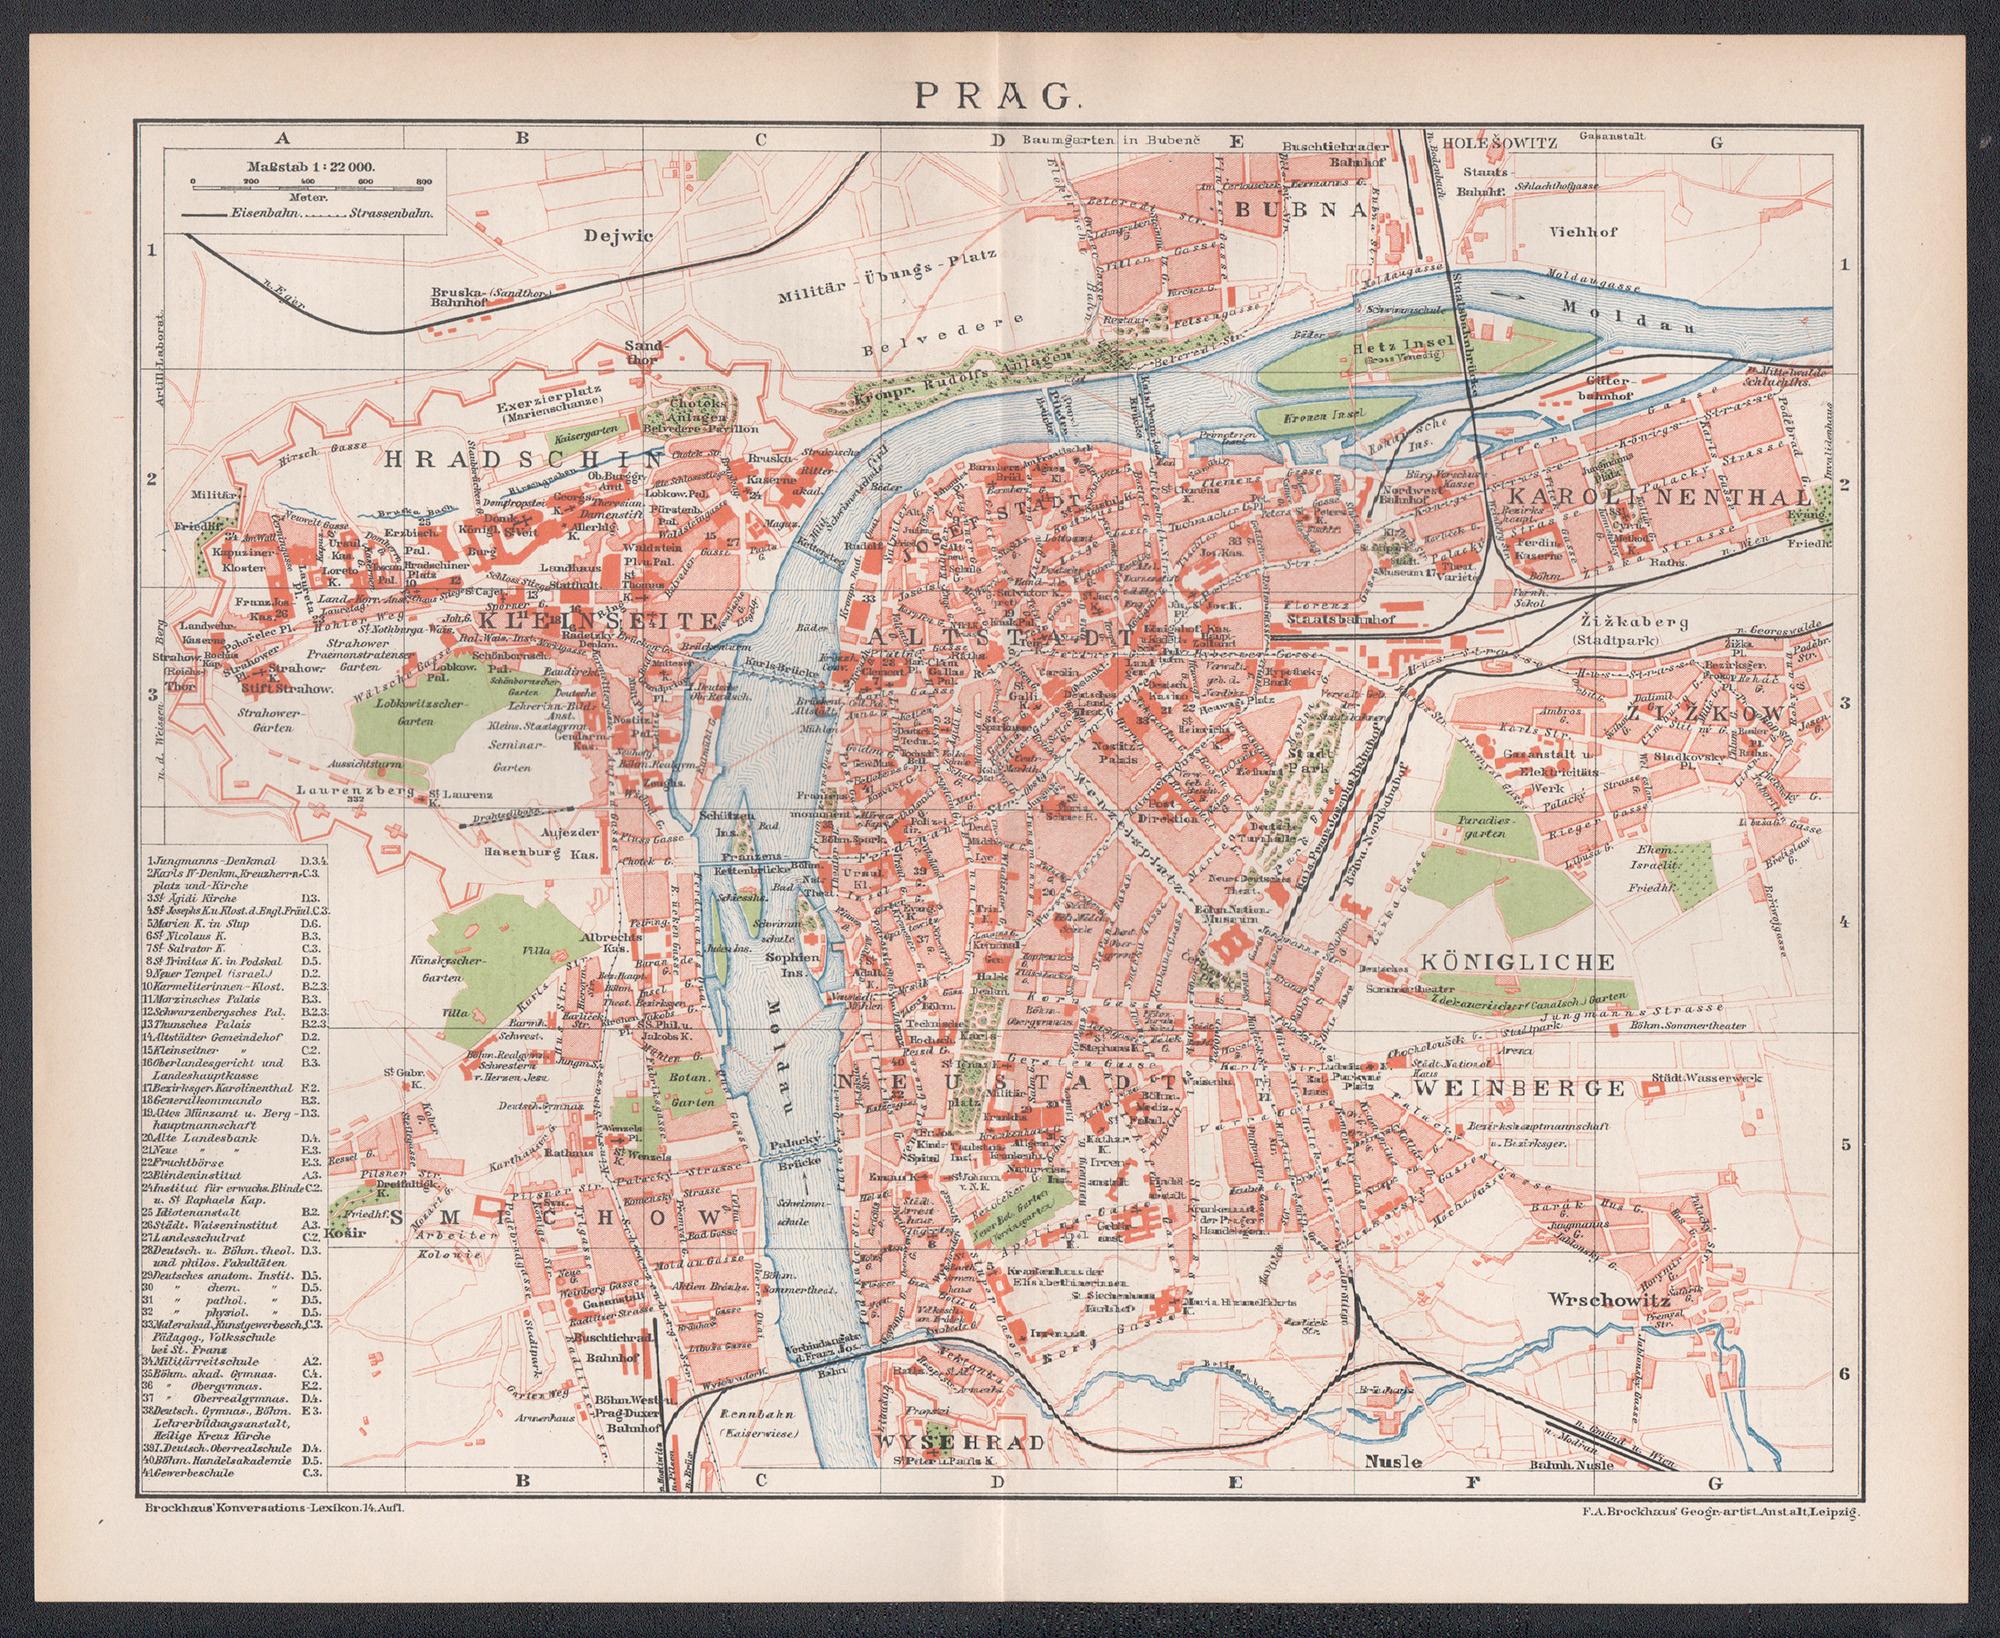 Prag, Tschechoslowakei. Antike Karte Stadtplan Chromolithographie, um 1895 – Print von Unknown